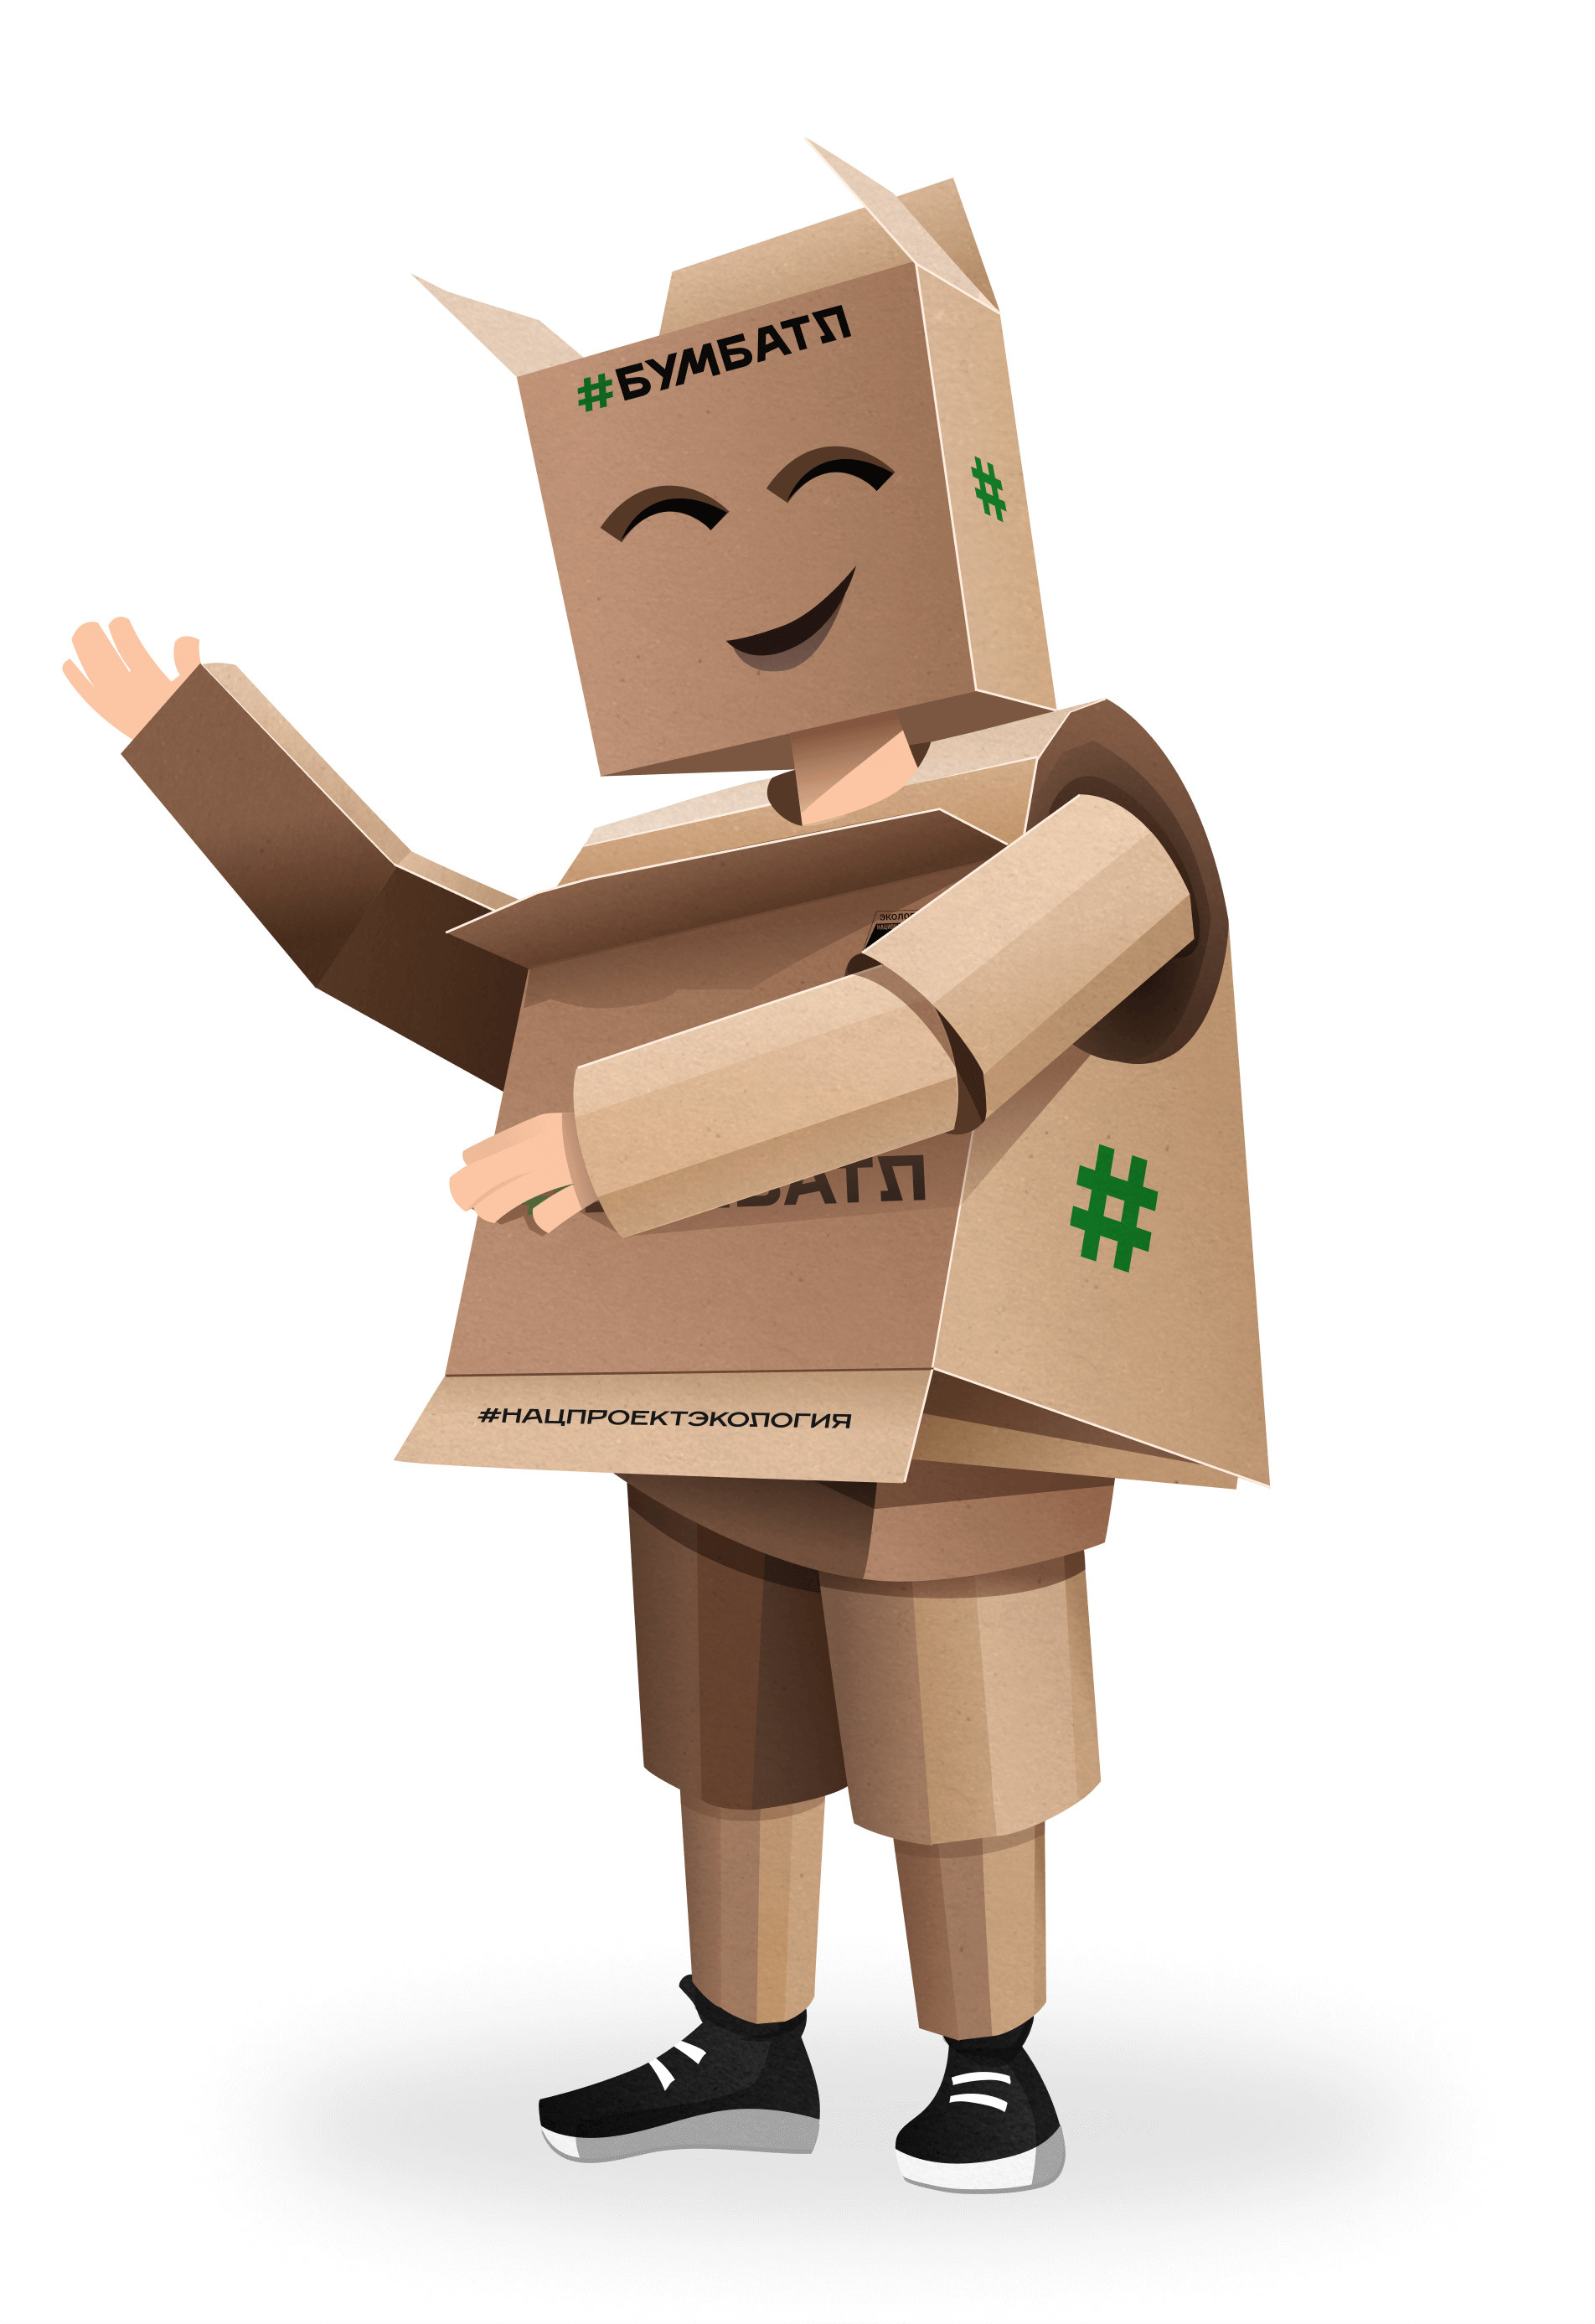 Фигурка из картонных коробок стала логотипом акции